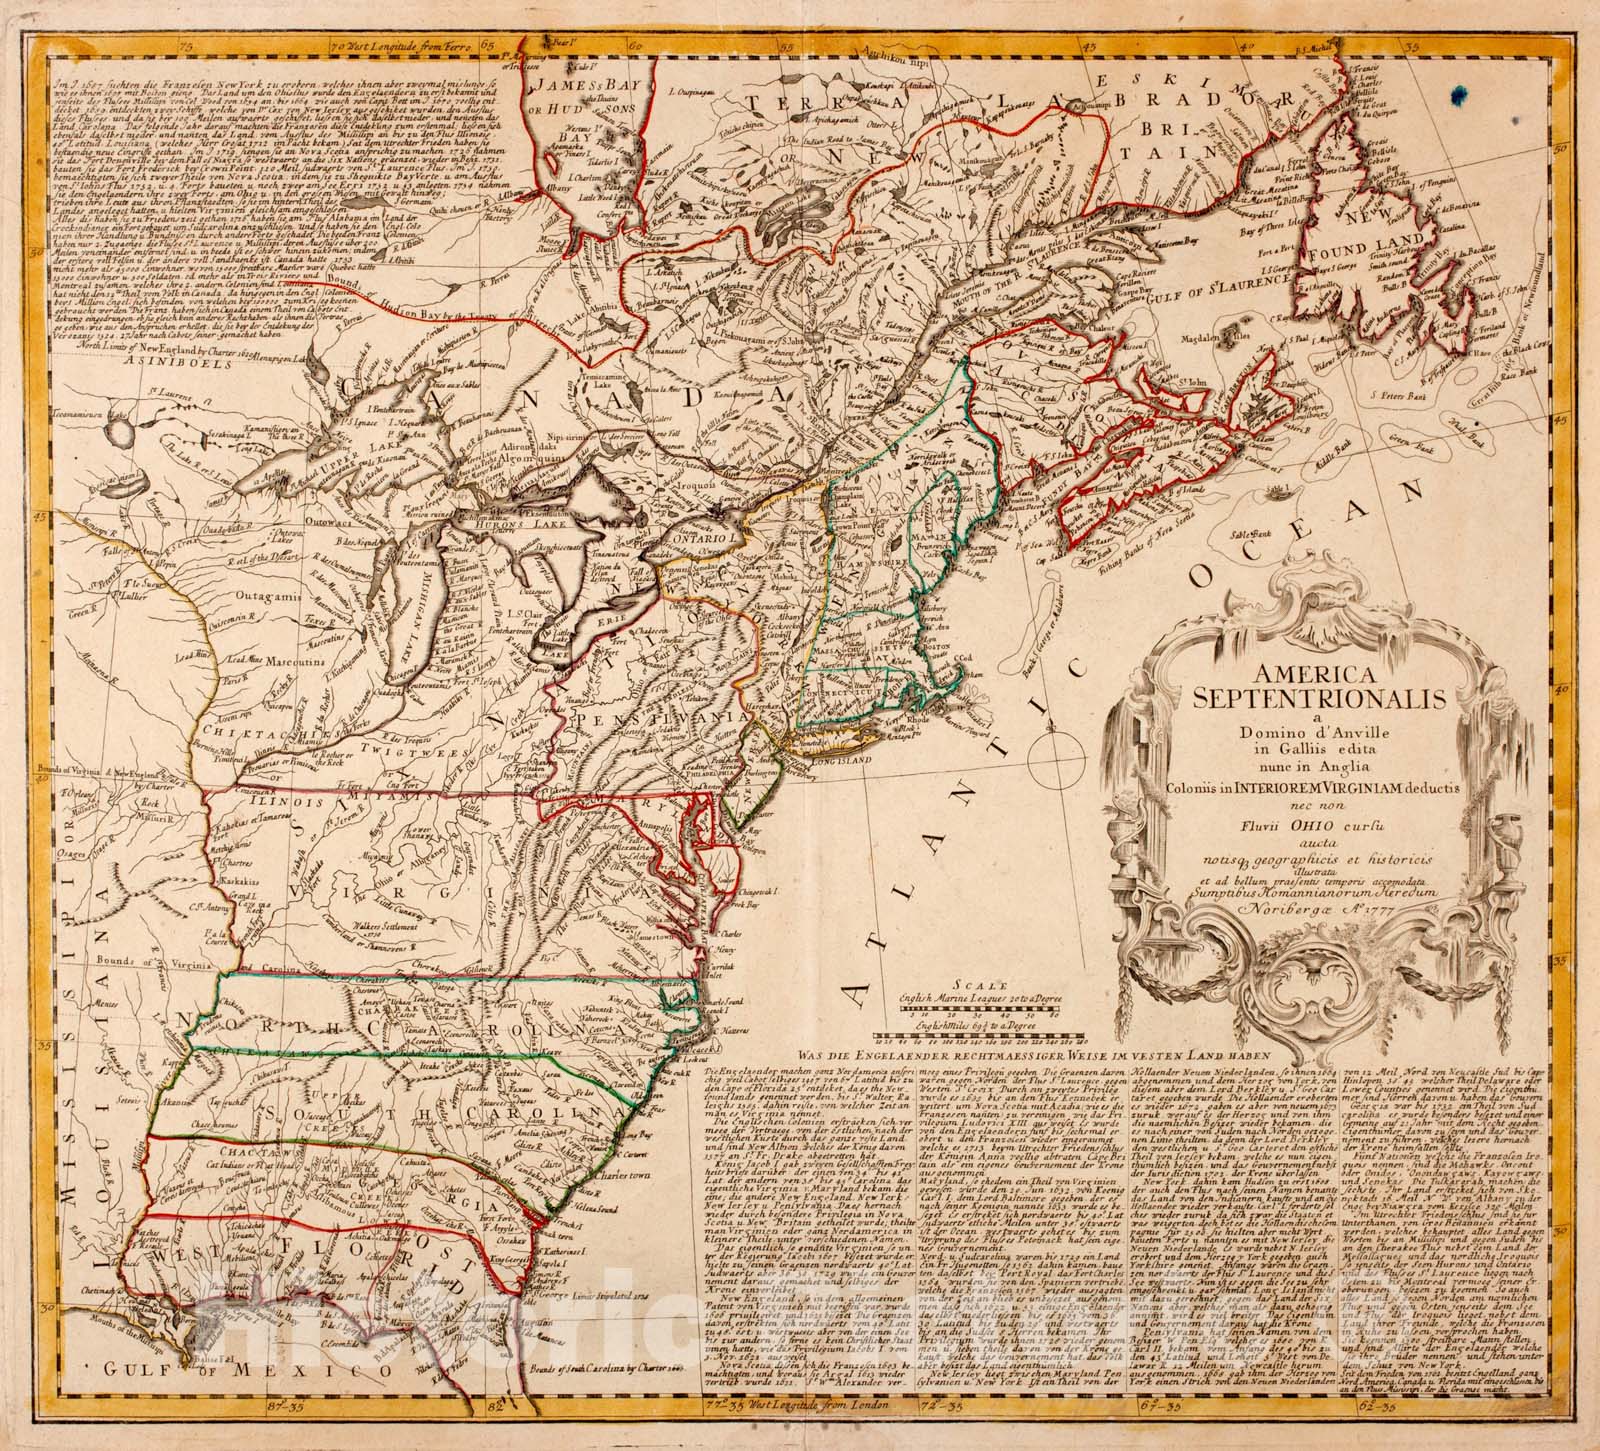 Historic Map : America septentrionalis a Domino d'Anville in Galliis edita nunc in Anglia coloniis in interiorem Virginiam deductis nec non fluvii Ohio cursu aucta, 1756 , Vintage Wall Art